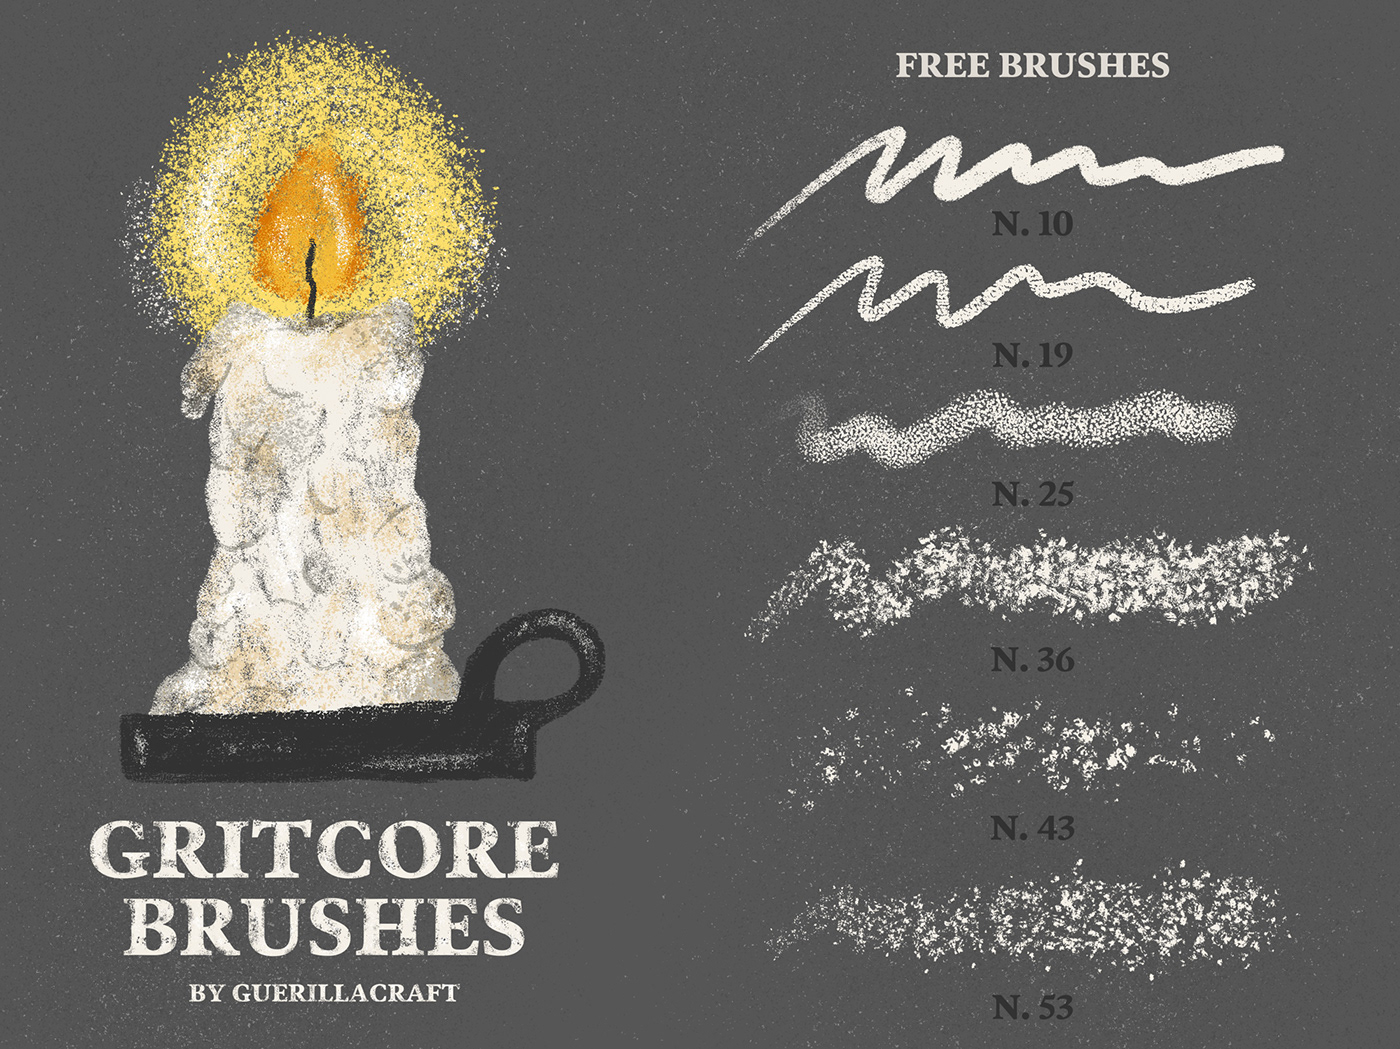 Procreate procreate brushes free brushes gritty brushes freebie book illustrations spooky illustrations free download Character illustrations Halloween